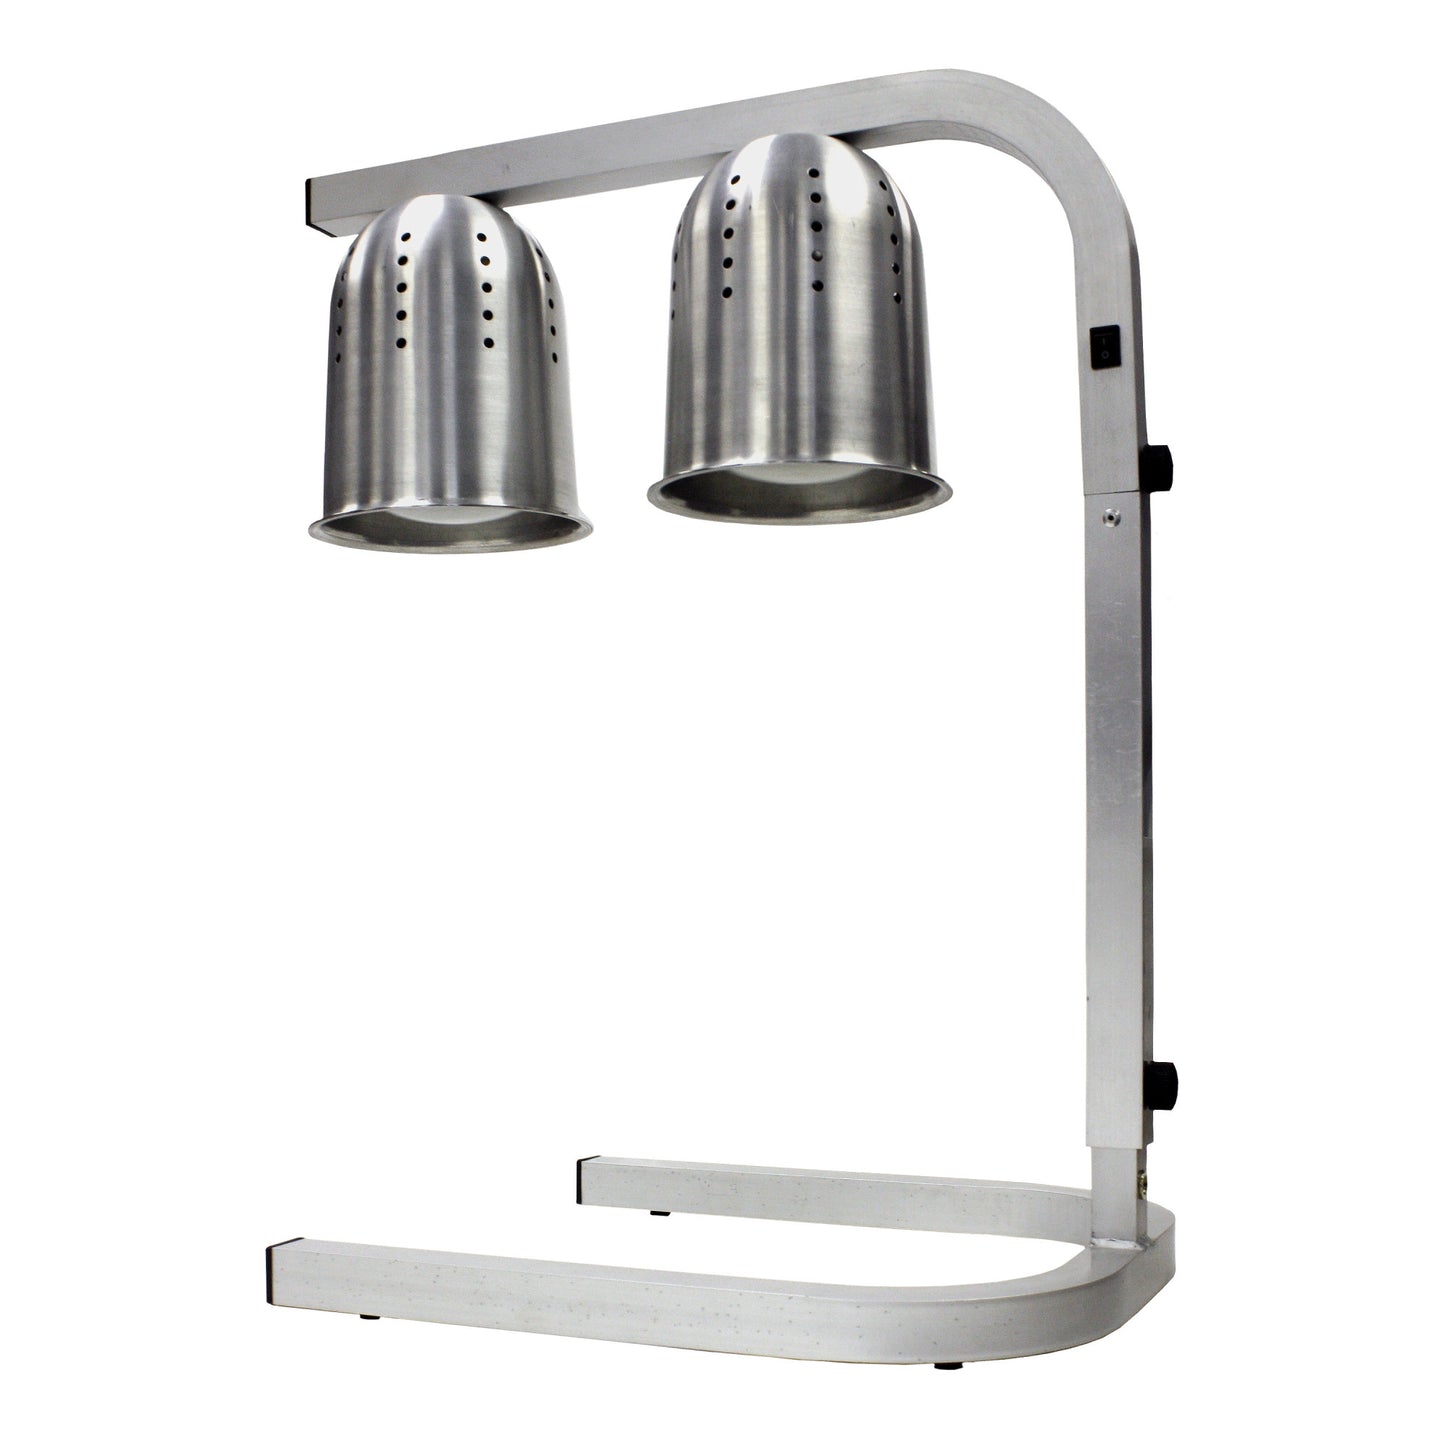 EHL-2 - Professional Electric Freestanding Heat Lamp